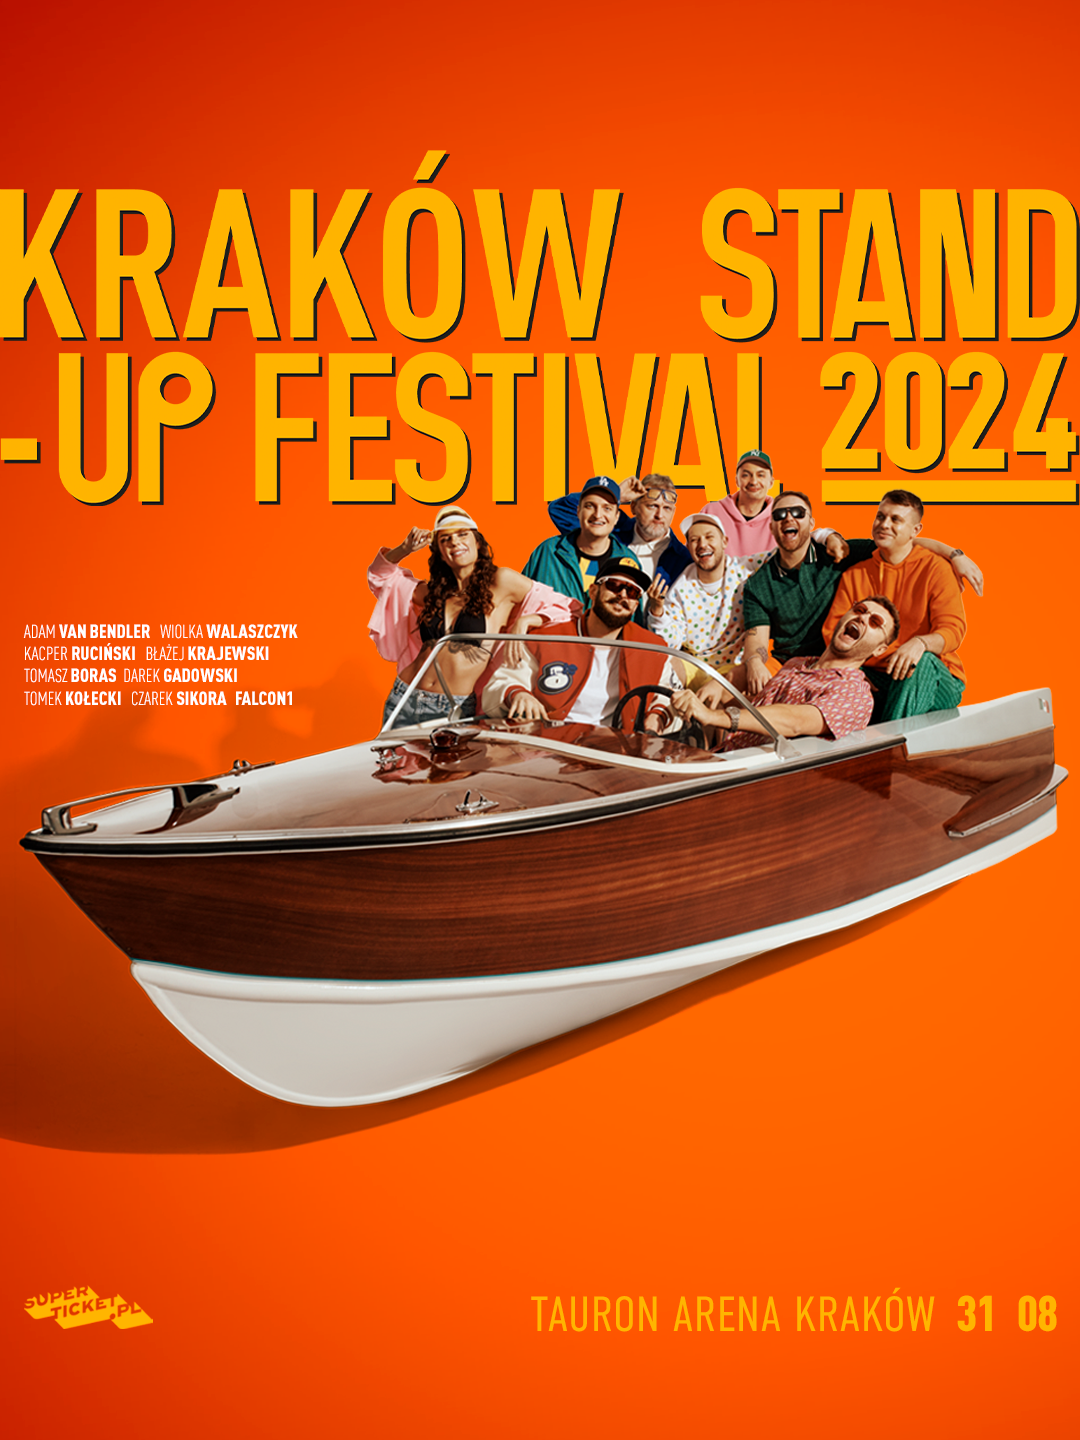 suf 2024 1080x1440 st thumb krakow - Kraków Stand-up Festival™ 2024